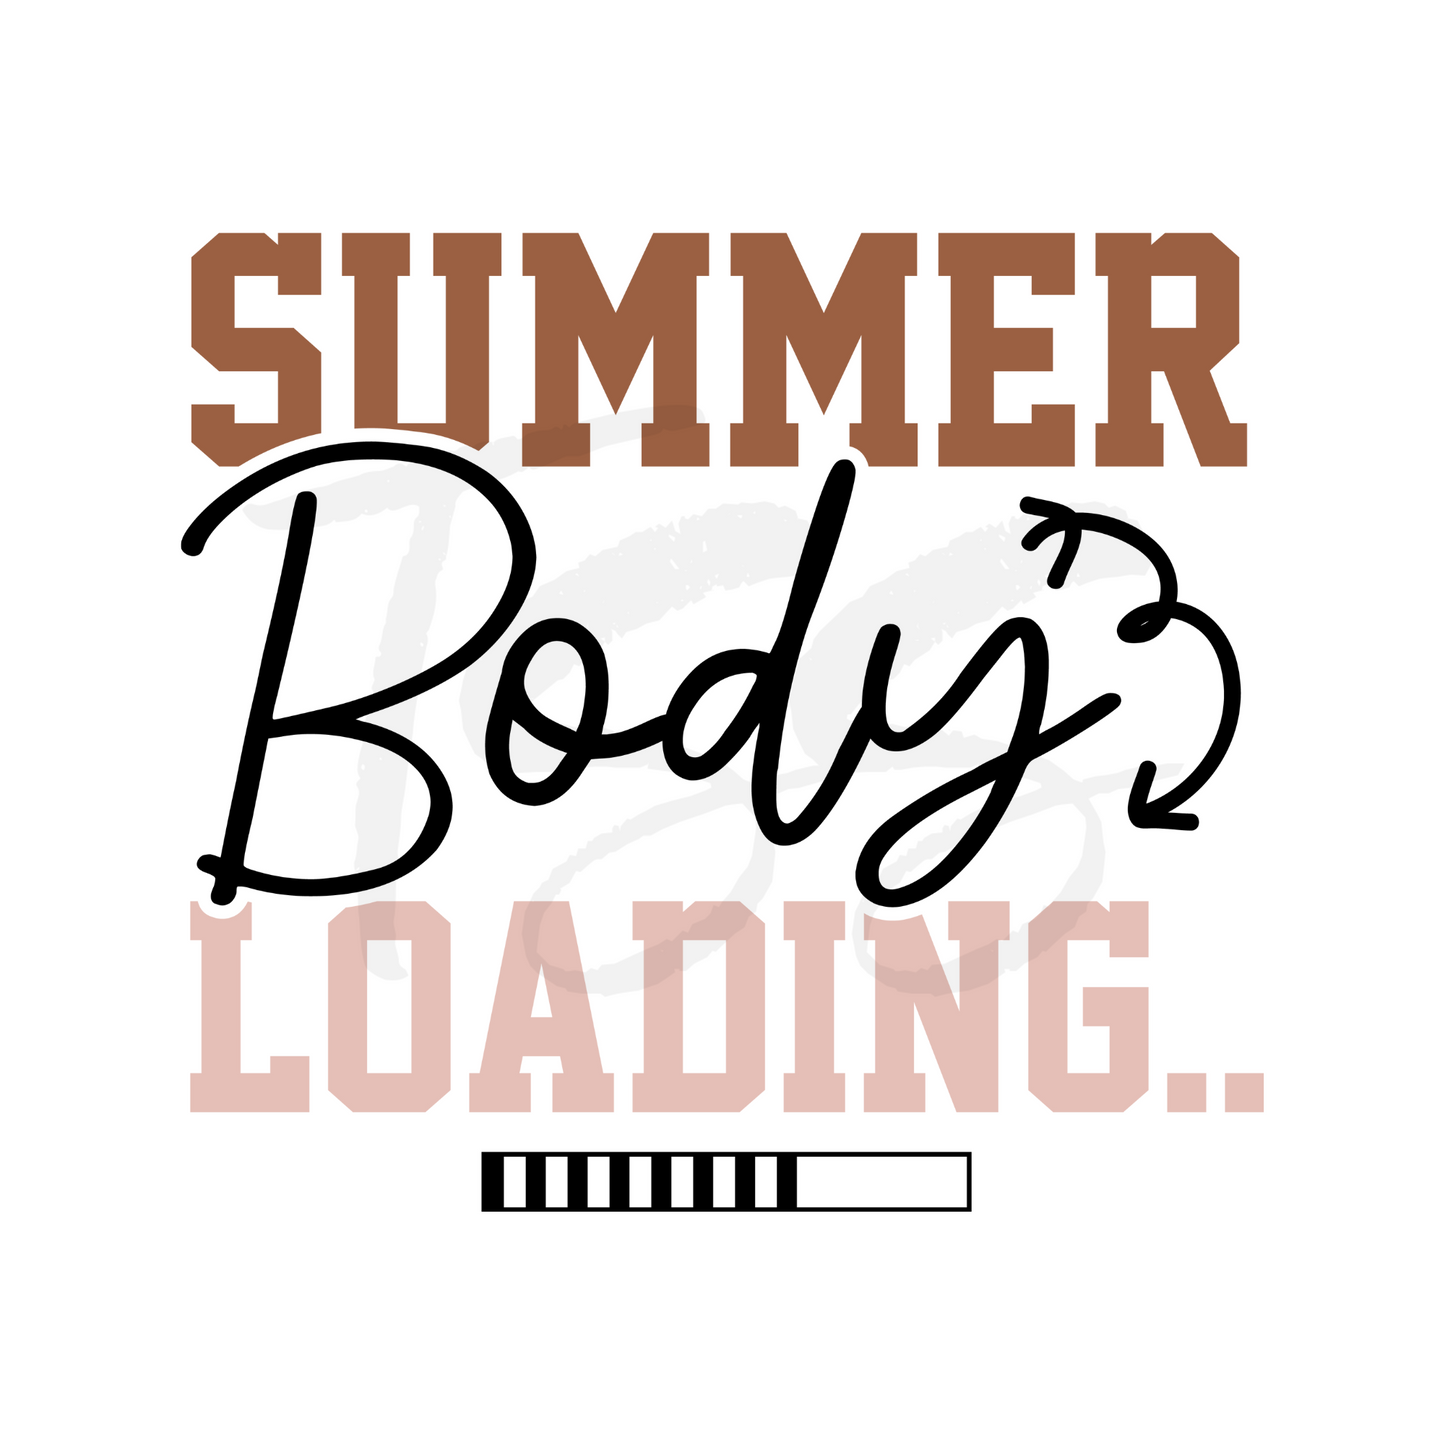 Summer Body Loading DTF Print Transfer